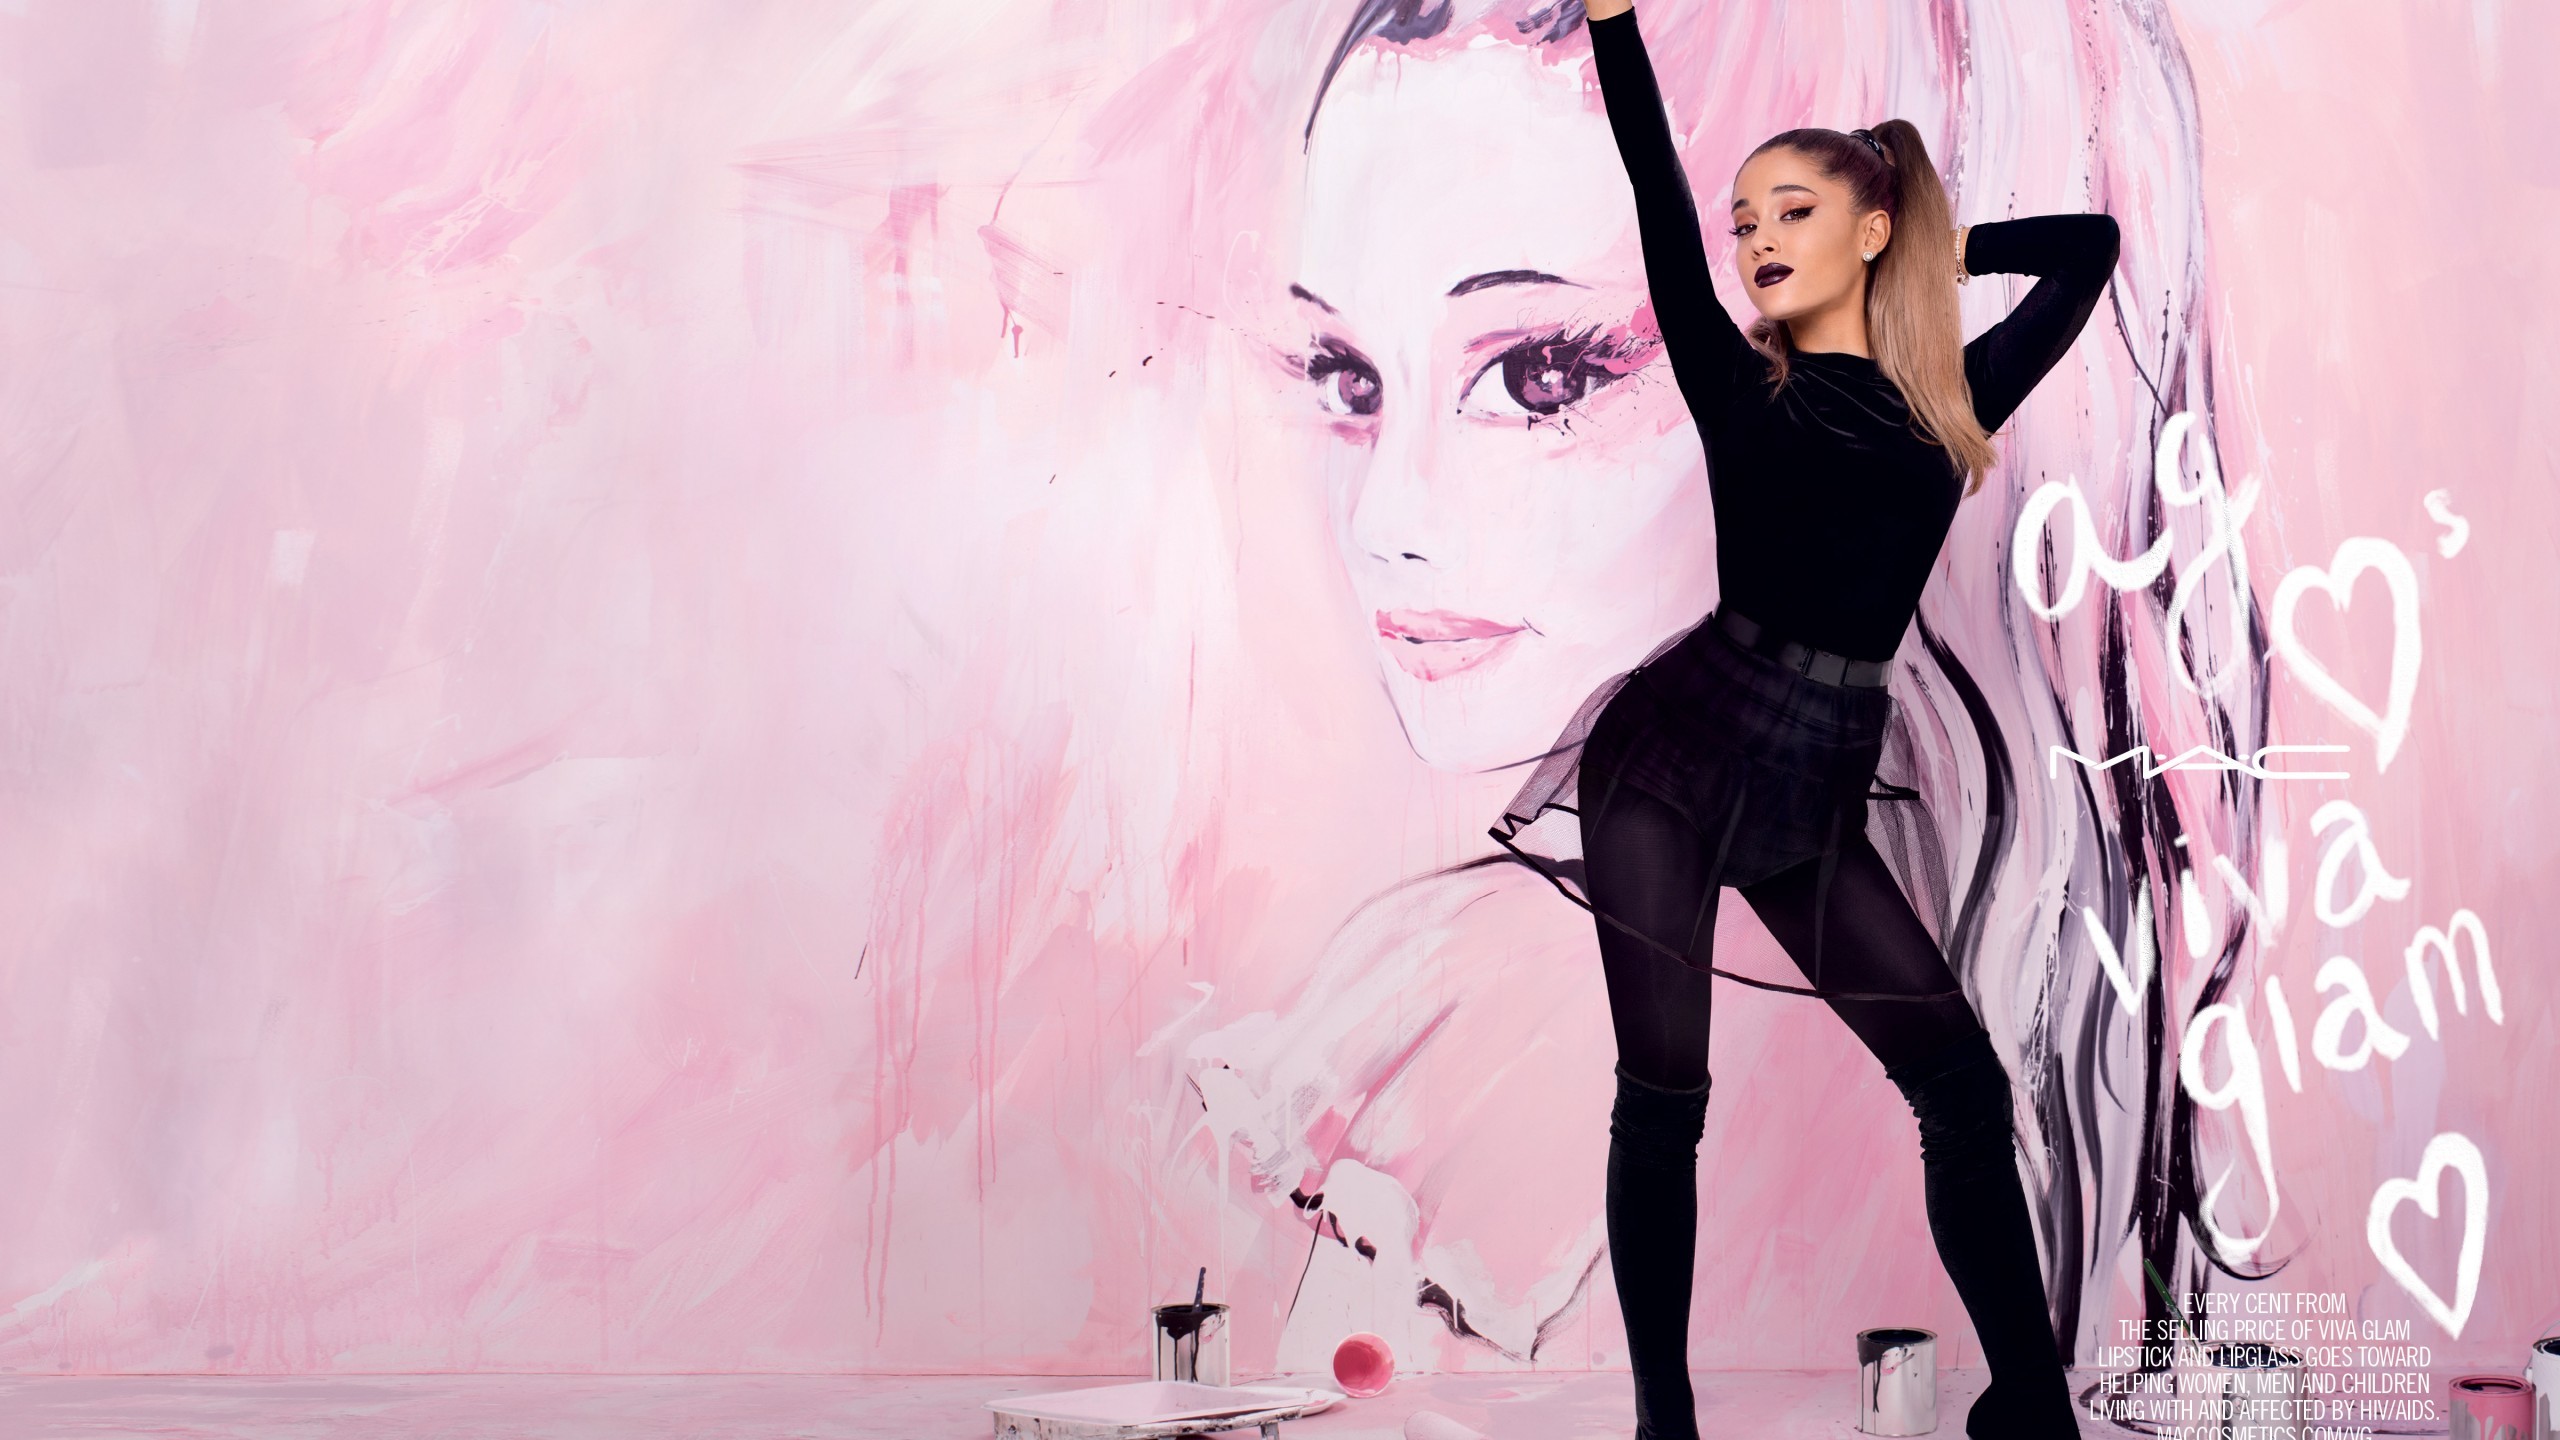 Ariana Grande Singer 2018 Wallpapers